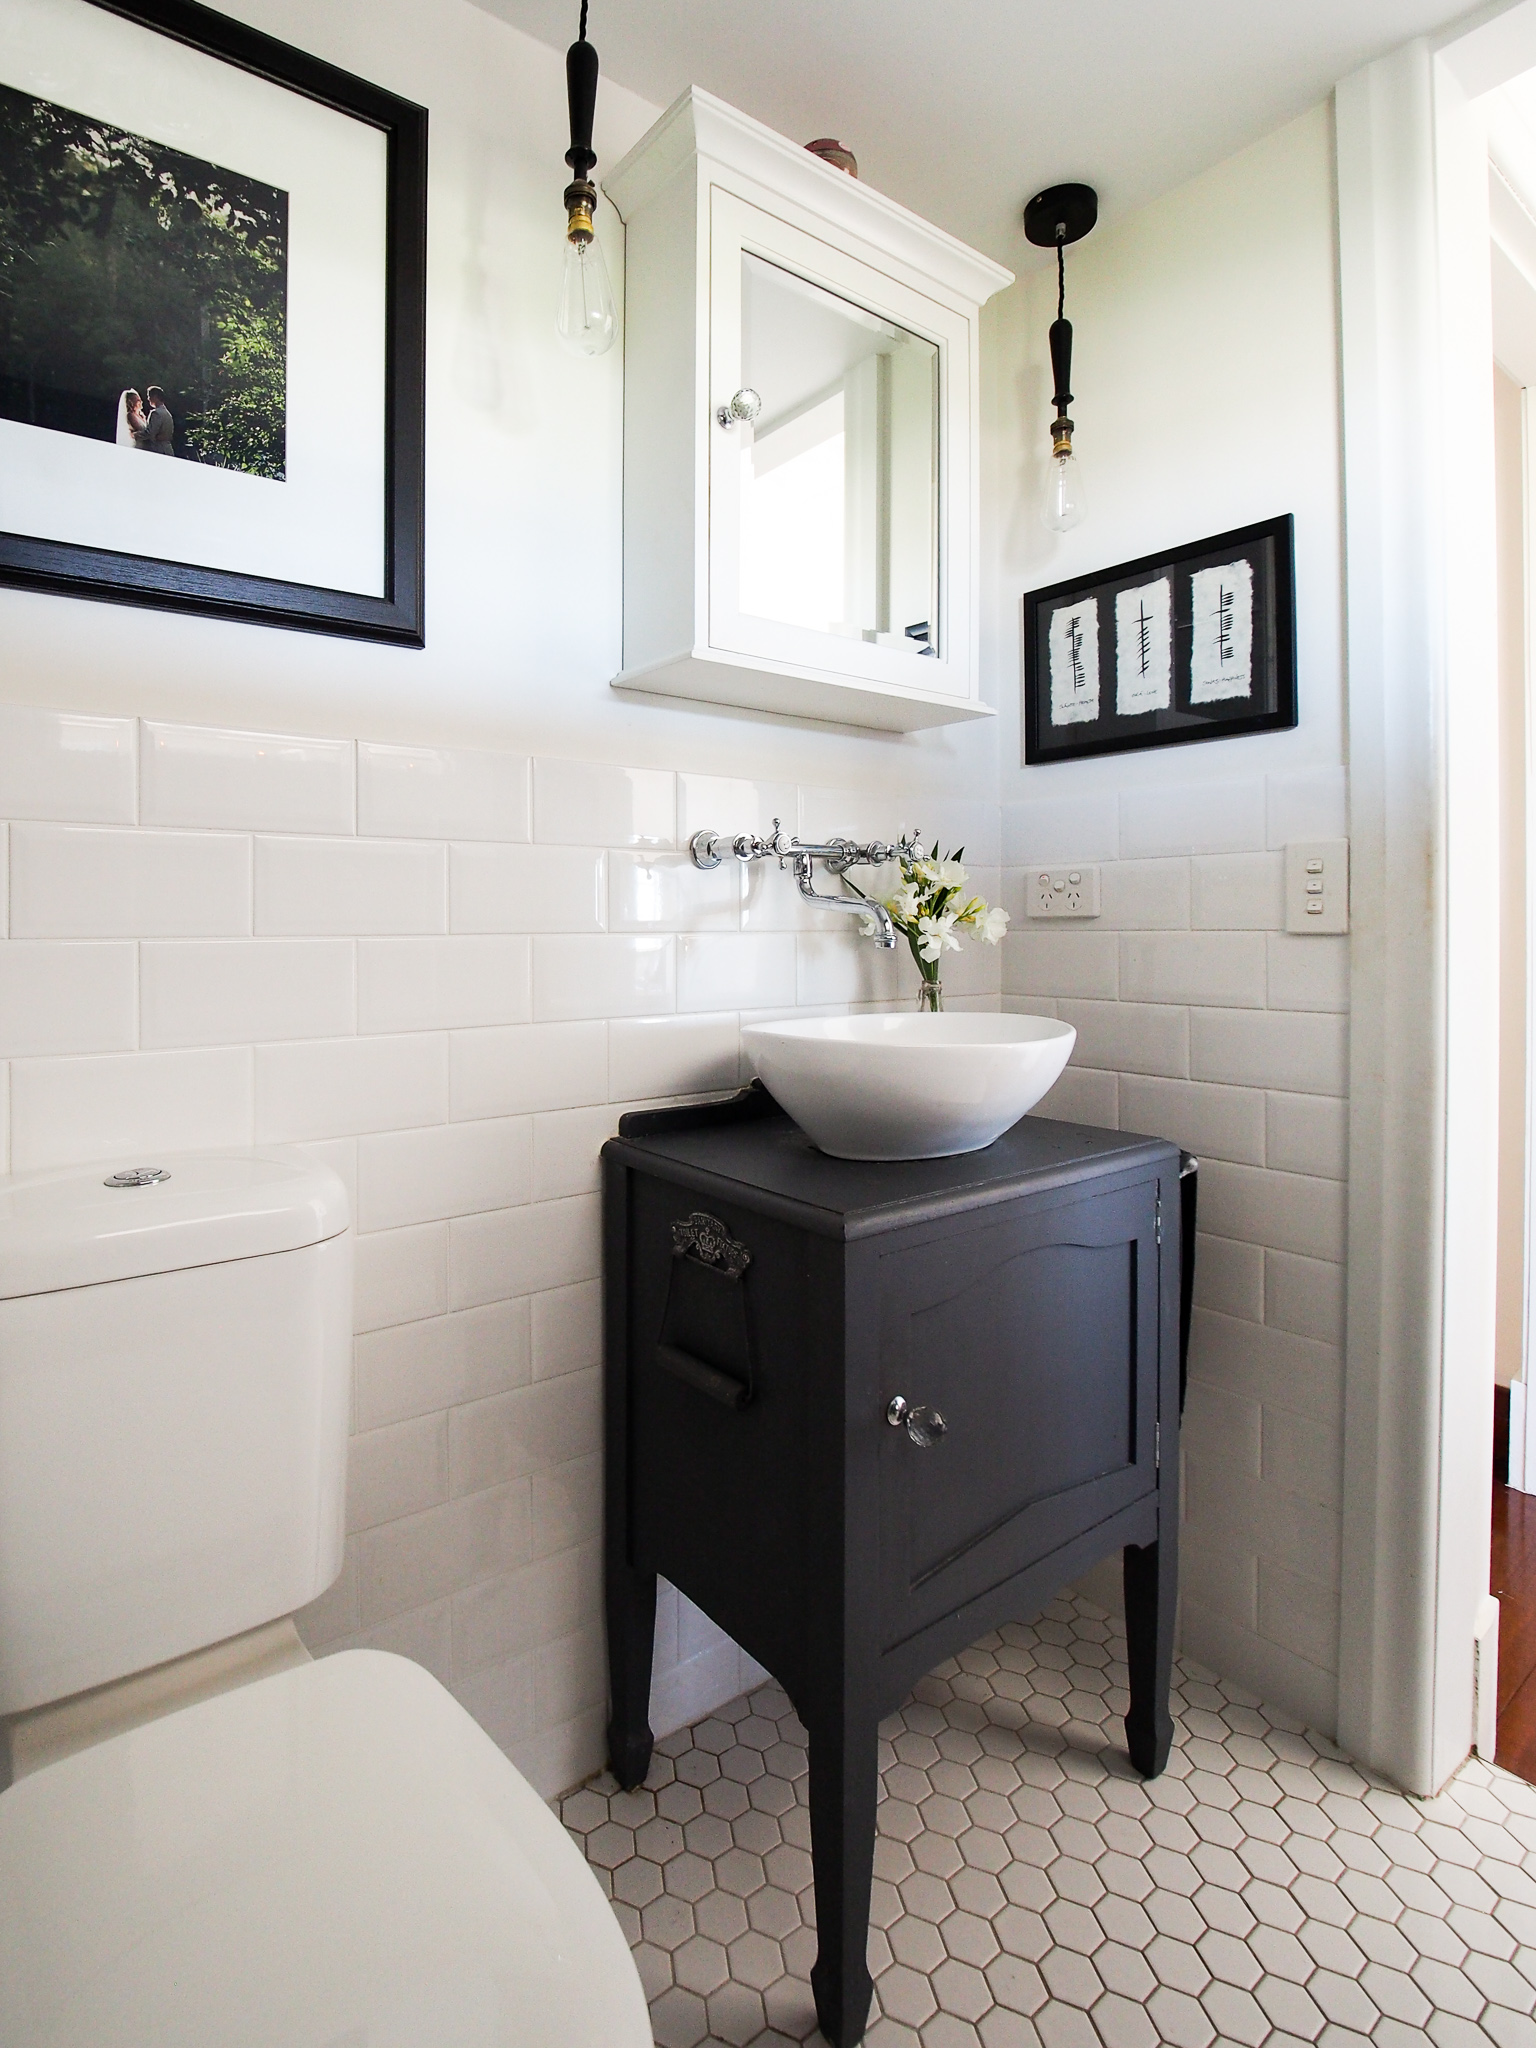 7-Toilet-suite-traditional-vanity-above-mount-basin-mirror-cabinet-pendant-light-1